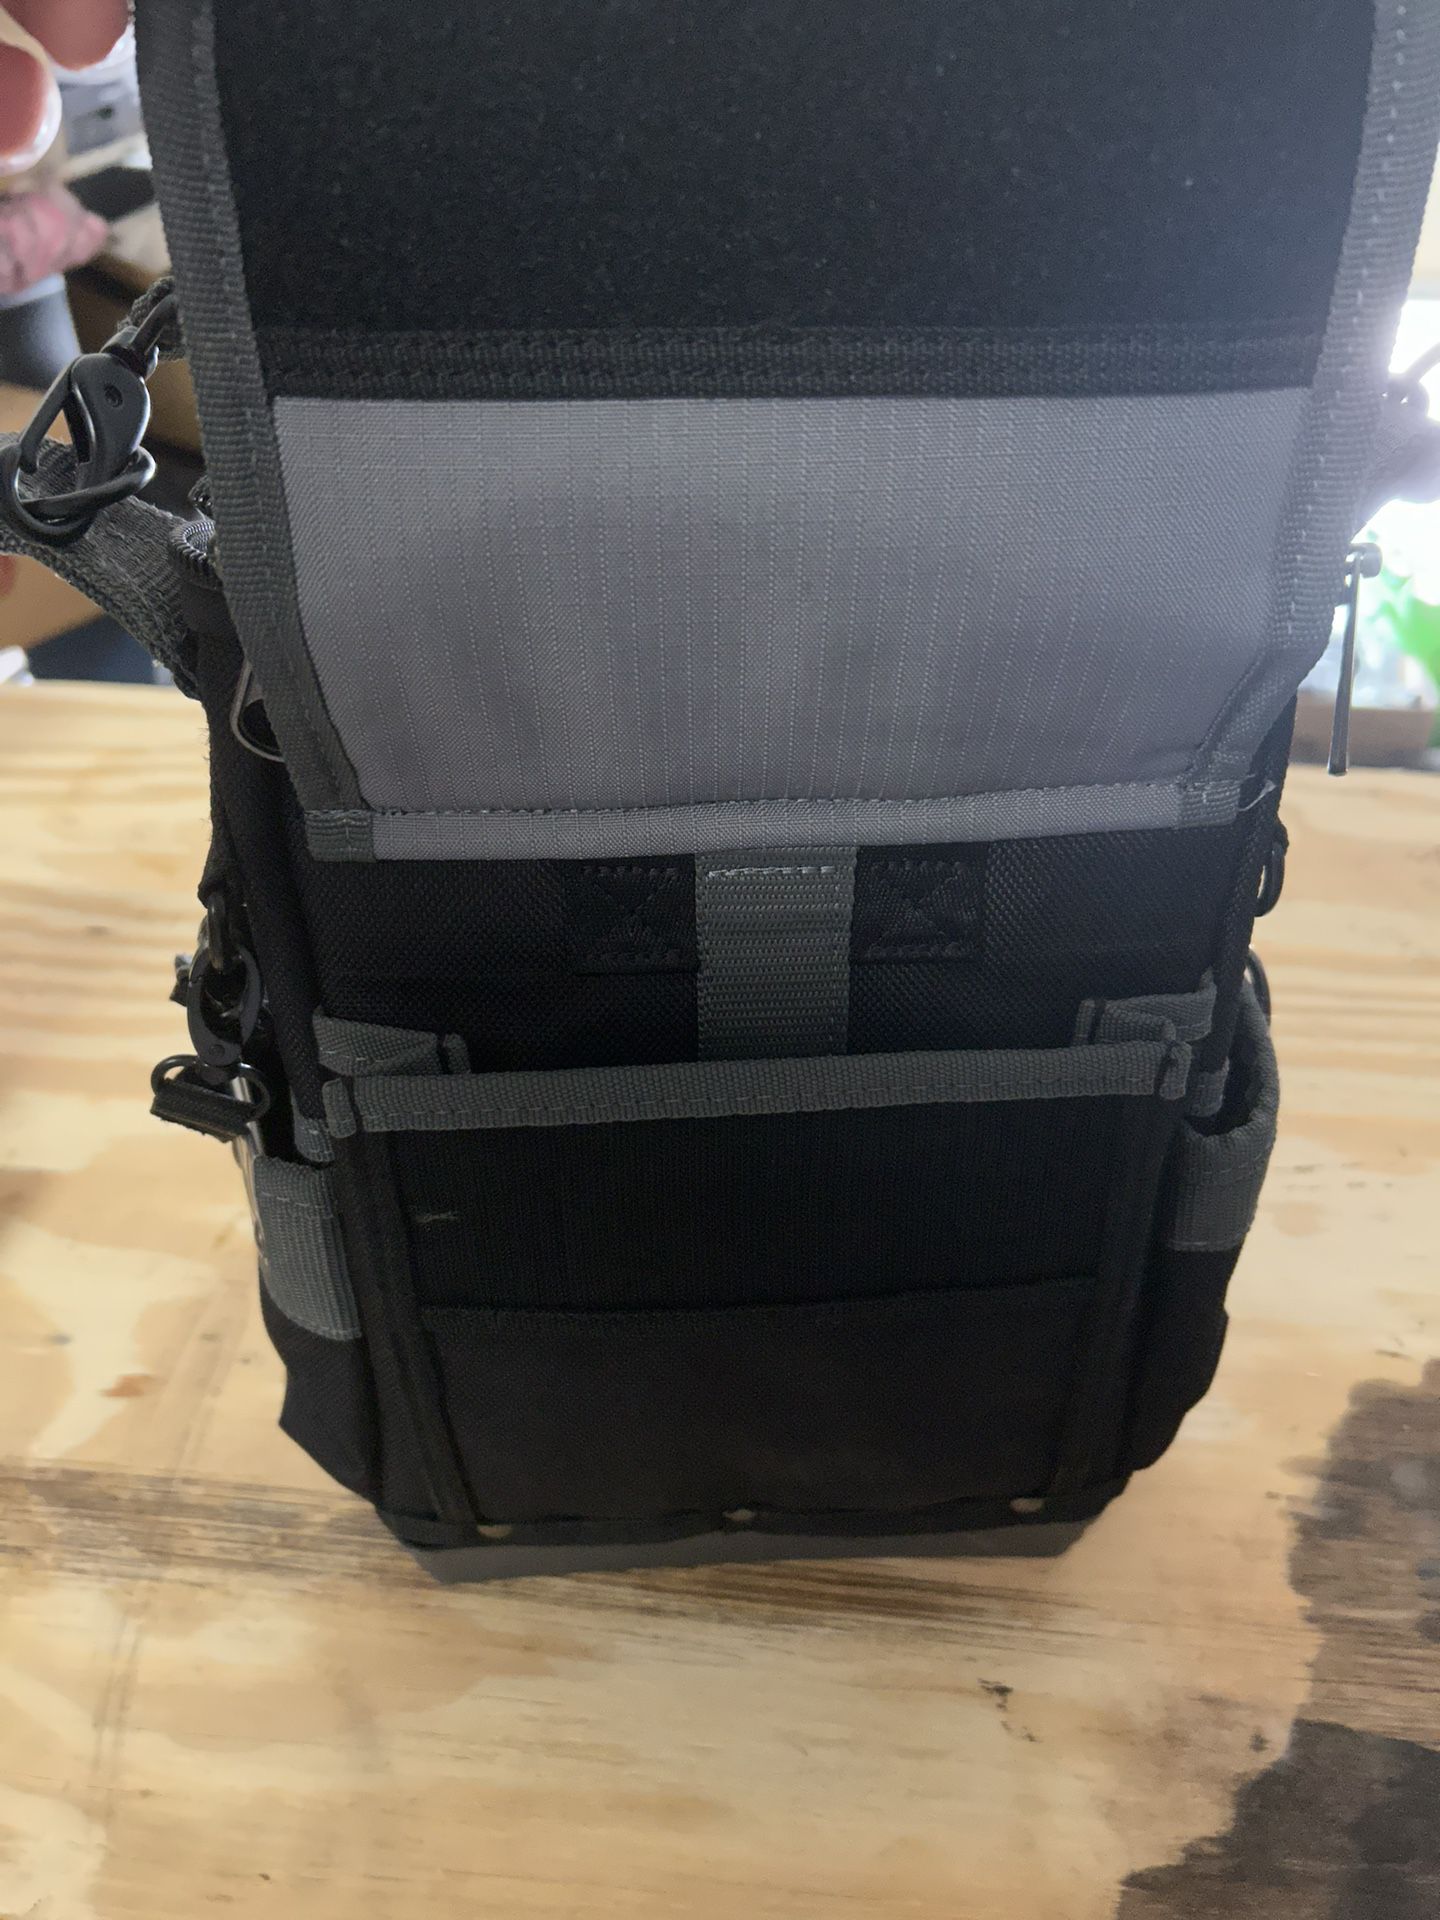 Veto Pro Pac Tp-Lc Tool Bag  $100 OBO